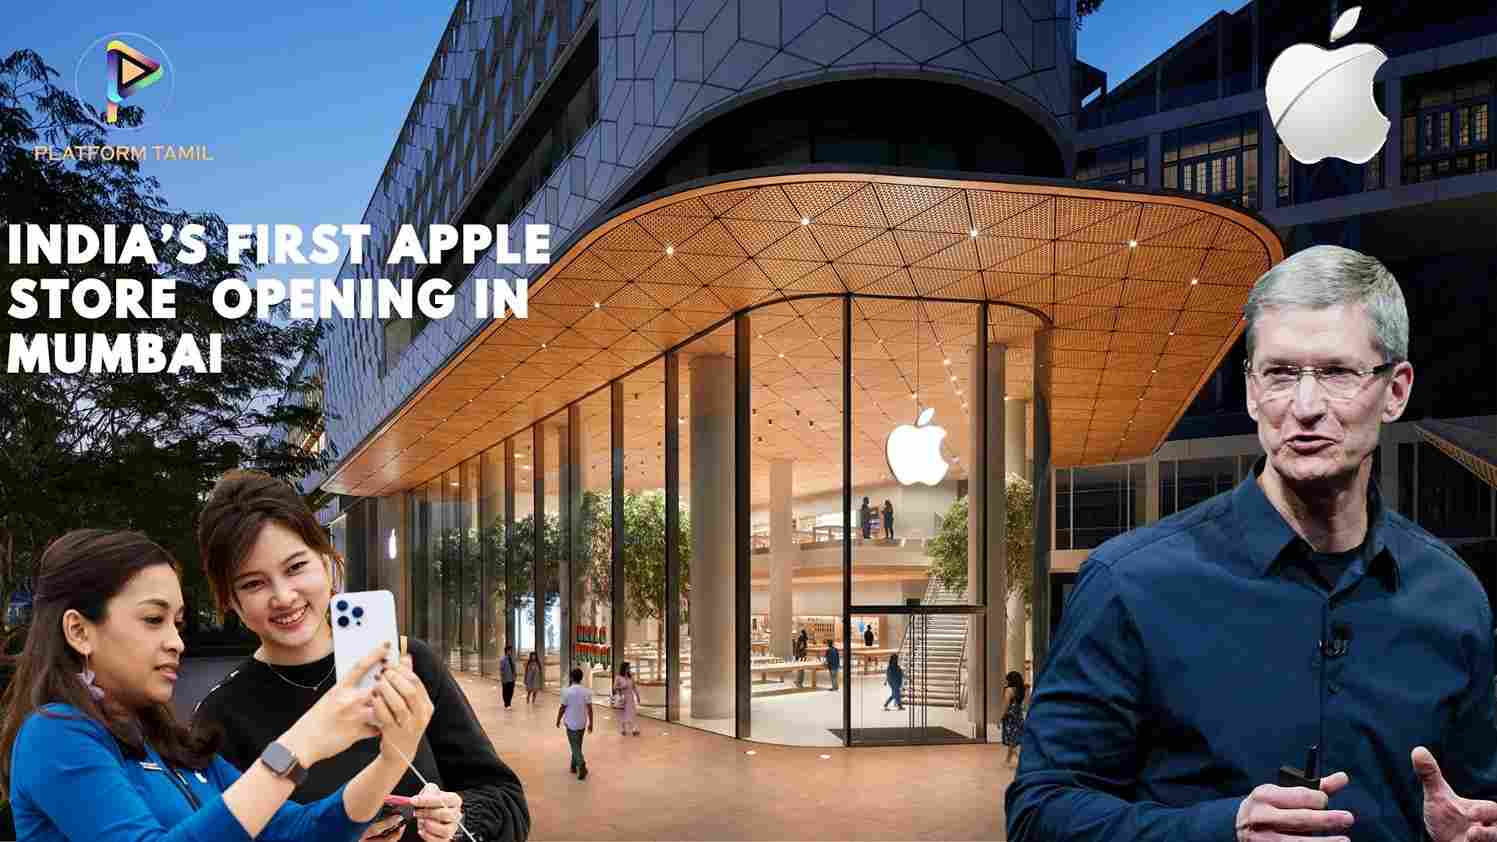 Apple Store In India - Platform Tamil